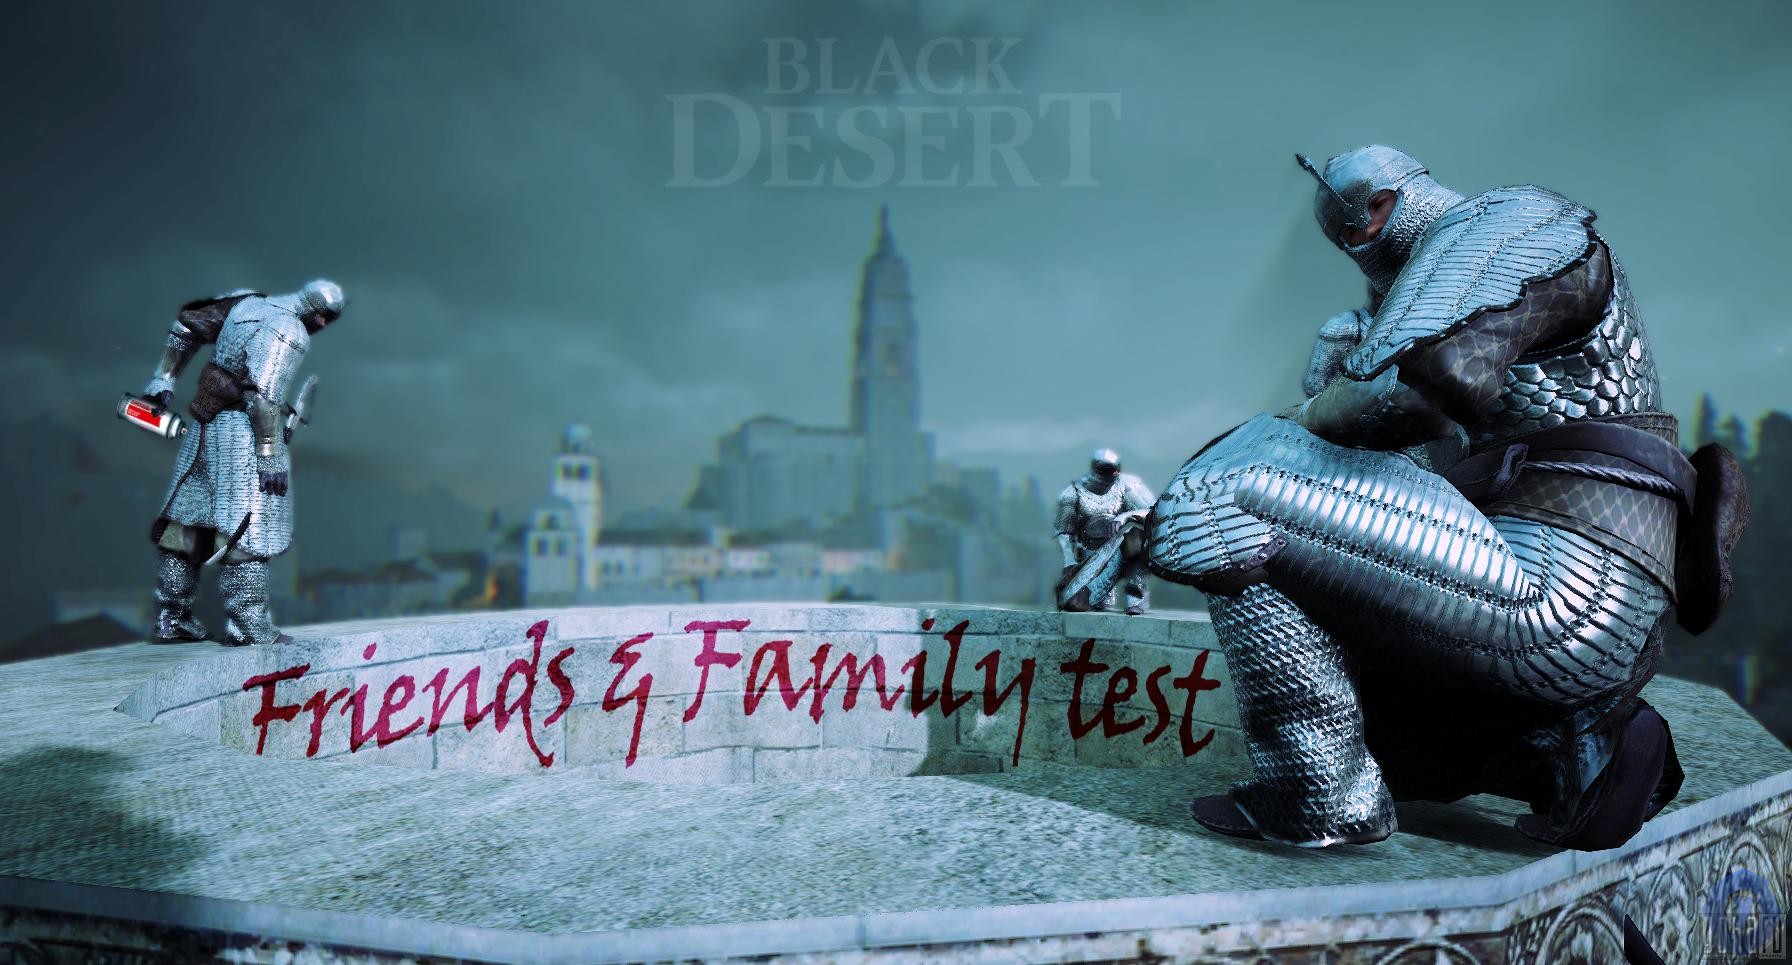 Black Desert - участники Friends & Family теста русской версии